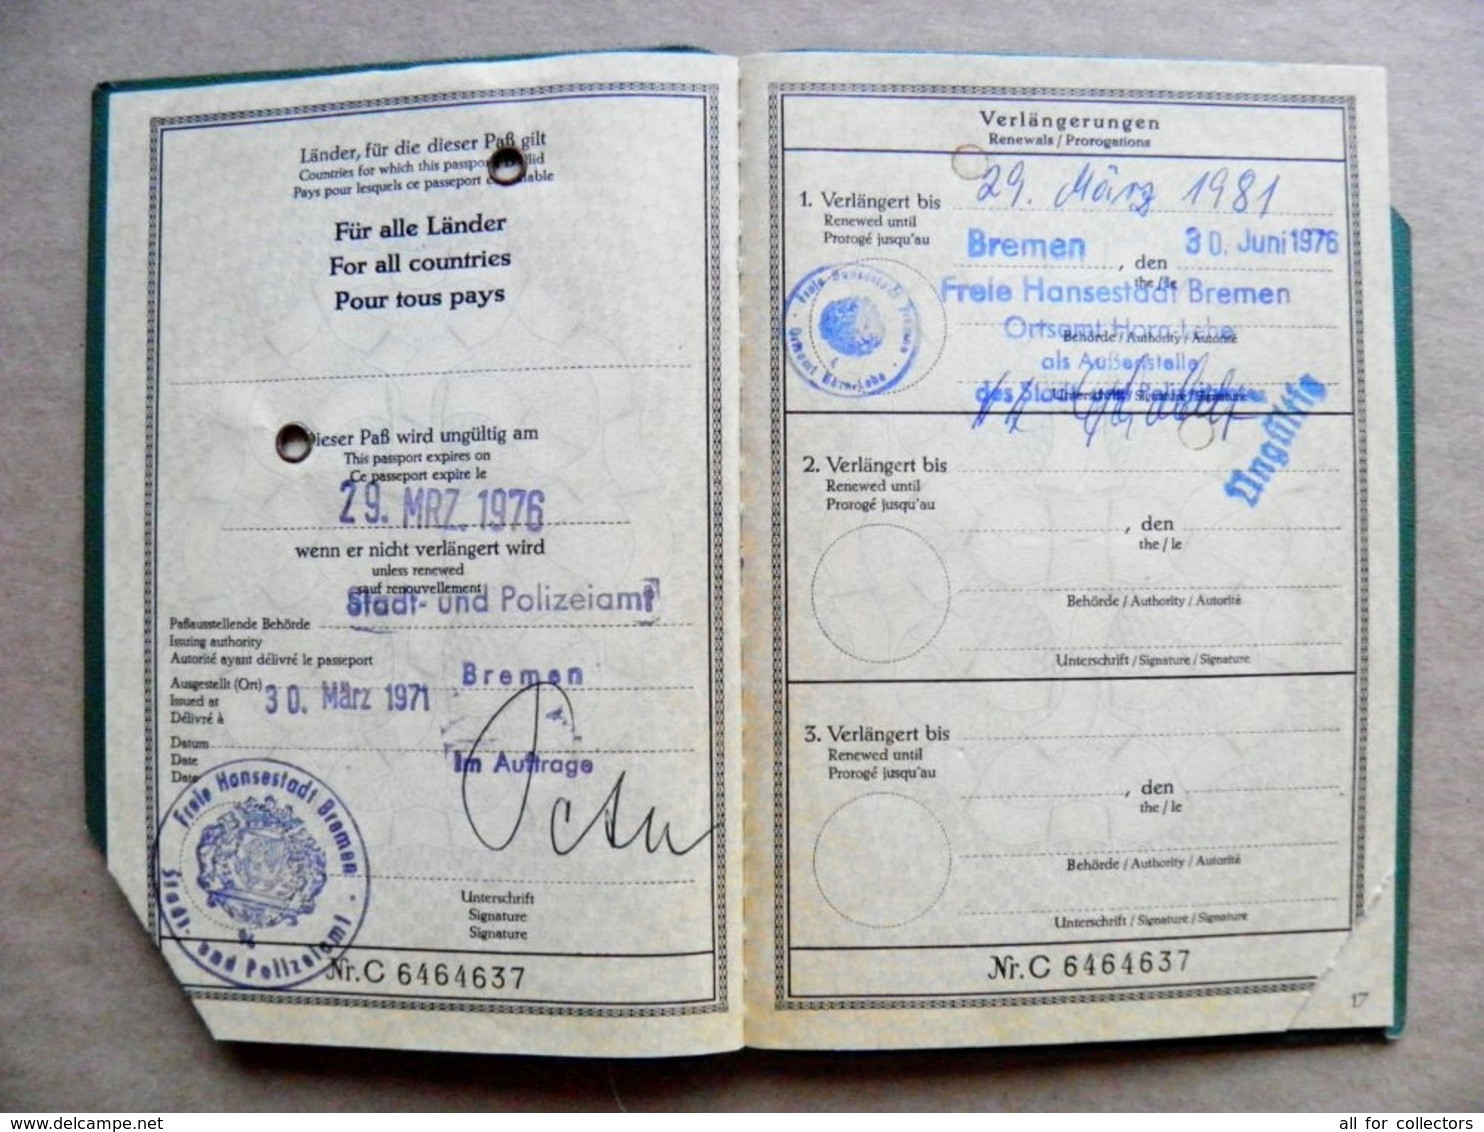 Reisepass Passport Germany Deutschland 1971 Bremen - Historische Documenten